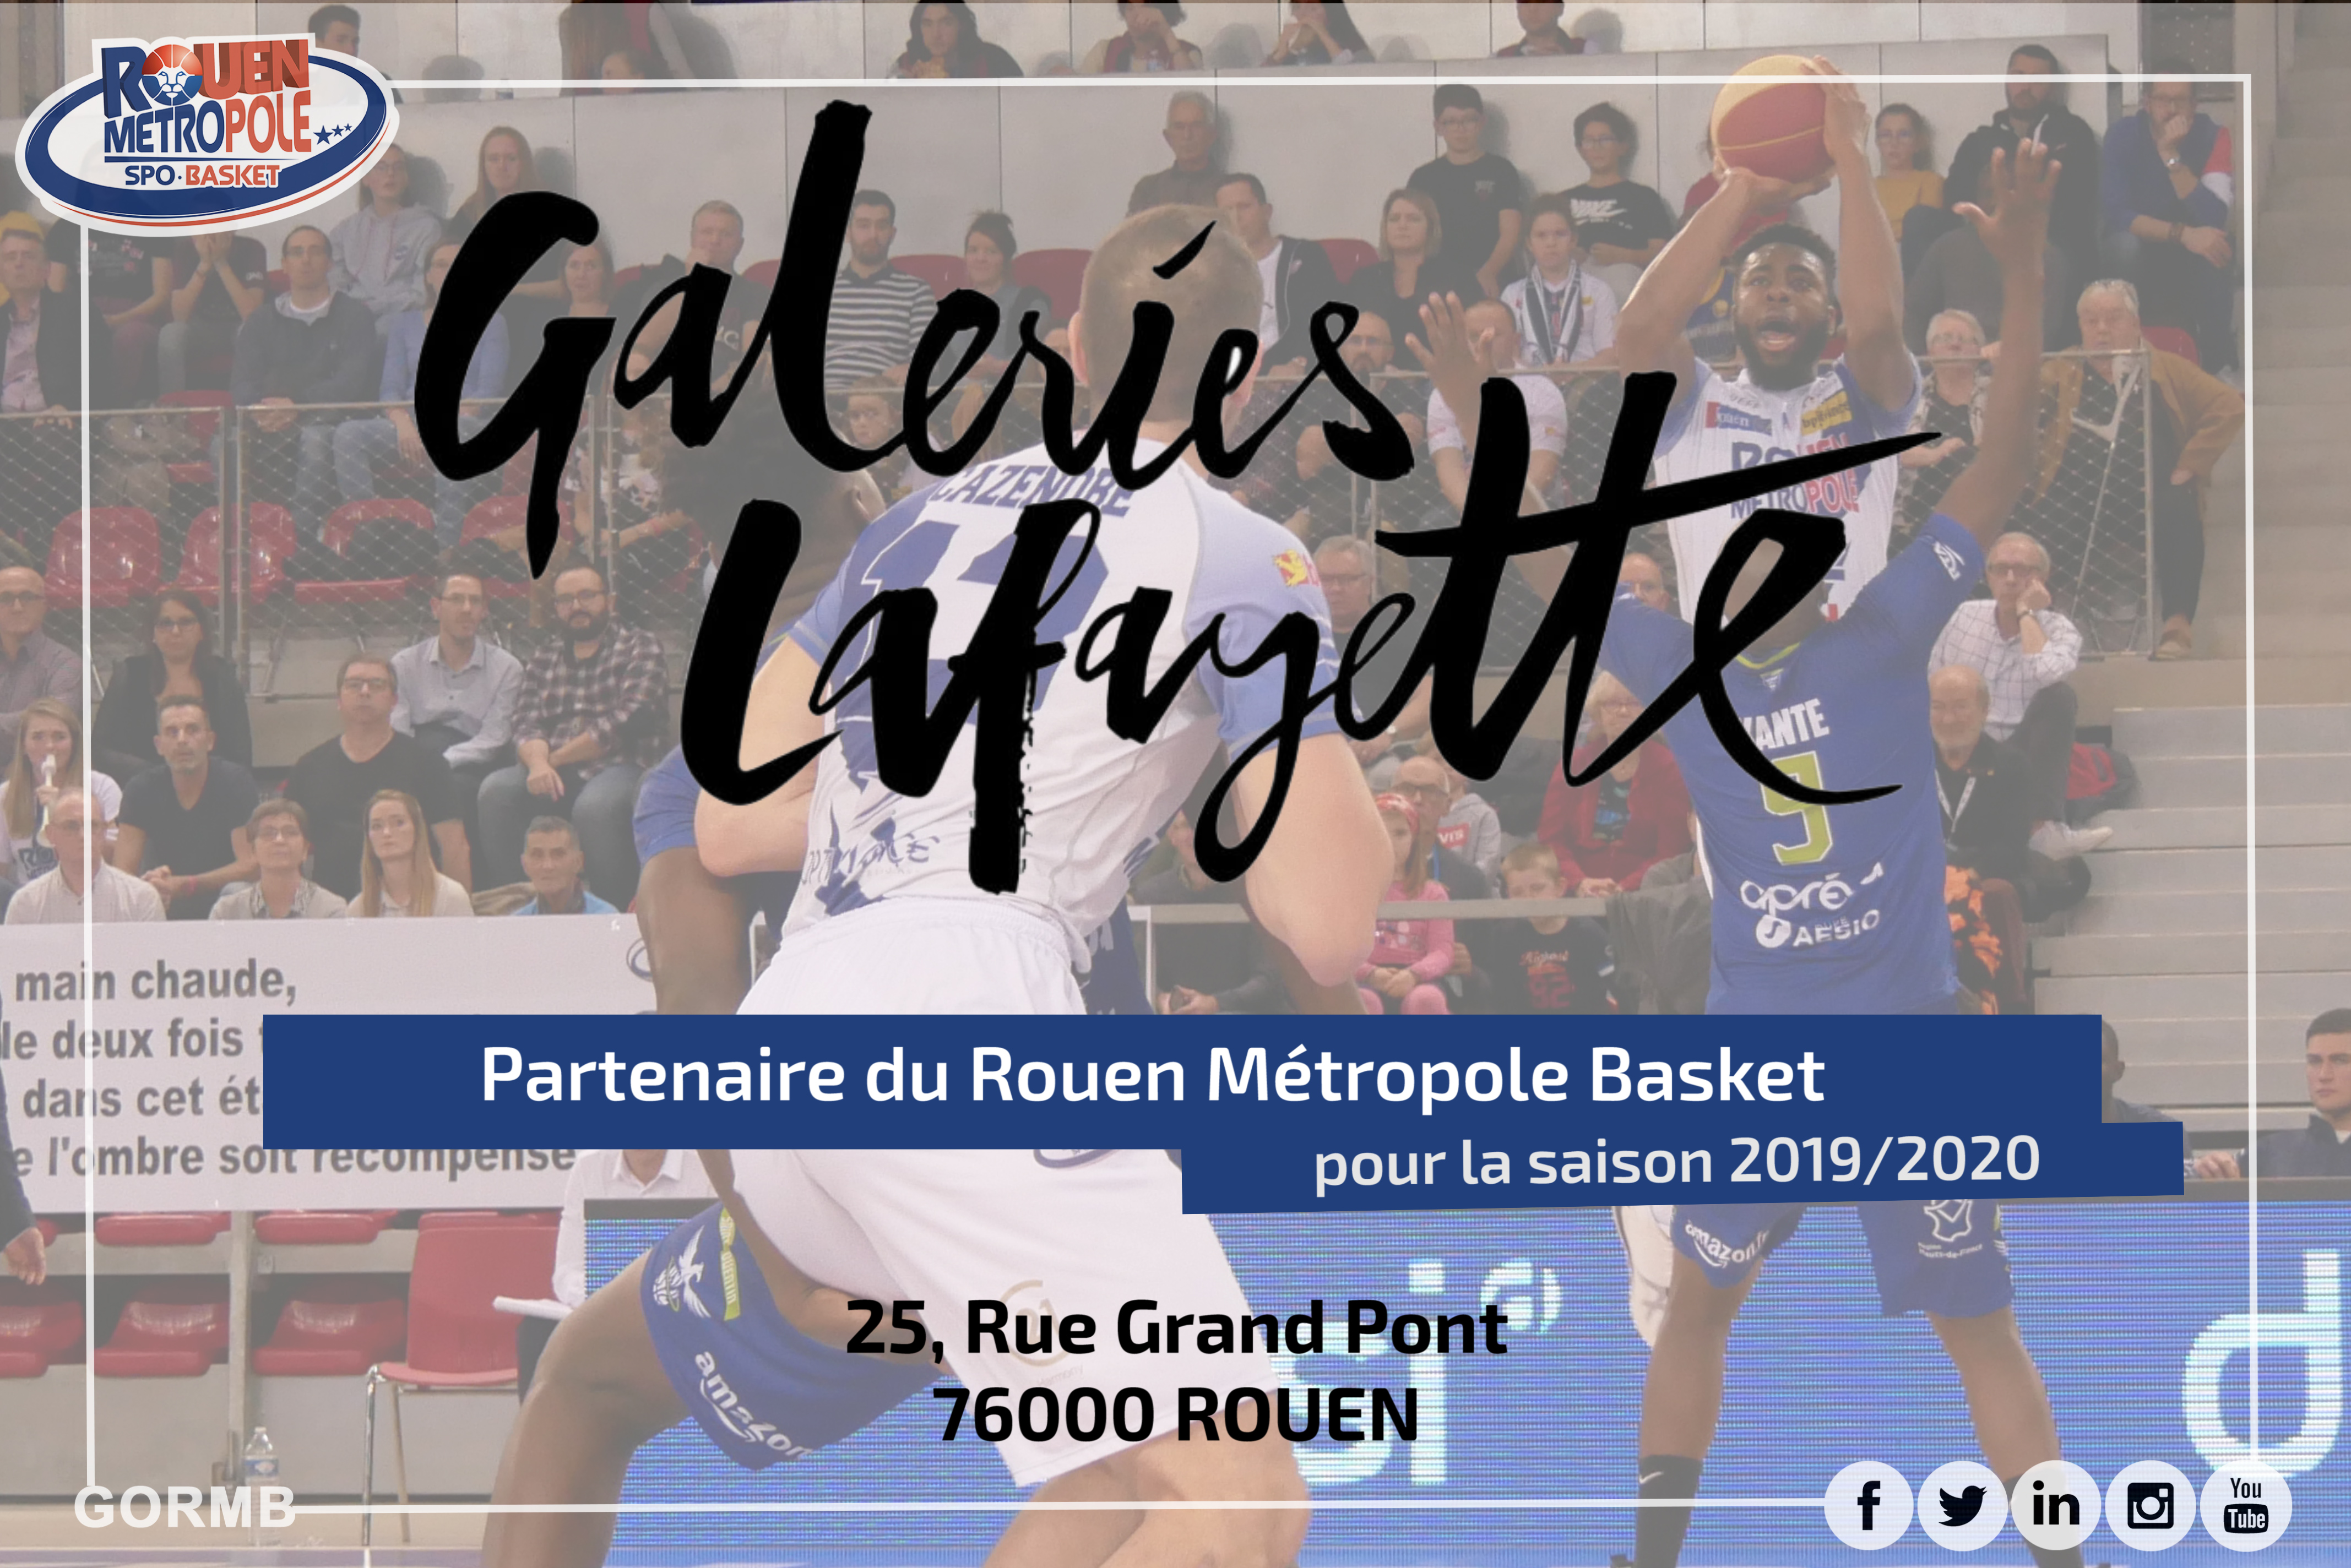 https://www.rouenmetrobasket.com/wp-content/uploads/2019/11/Galeries-Lafayette.jpg